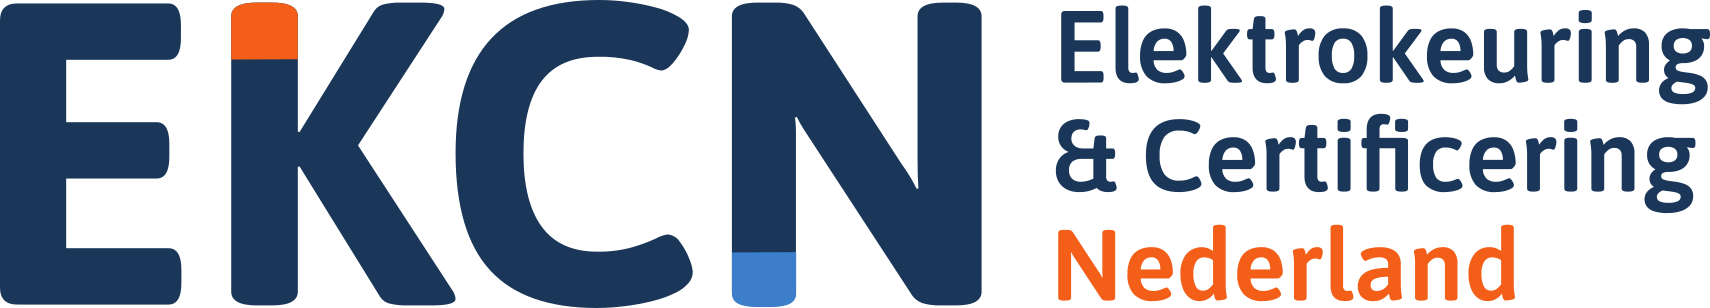 Incontrol-klant-EKCN-logo-NL